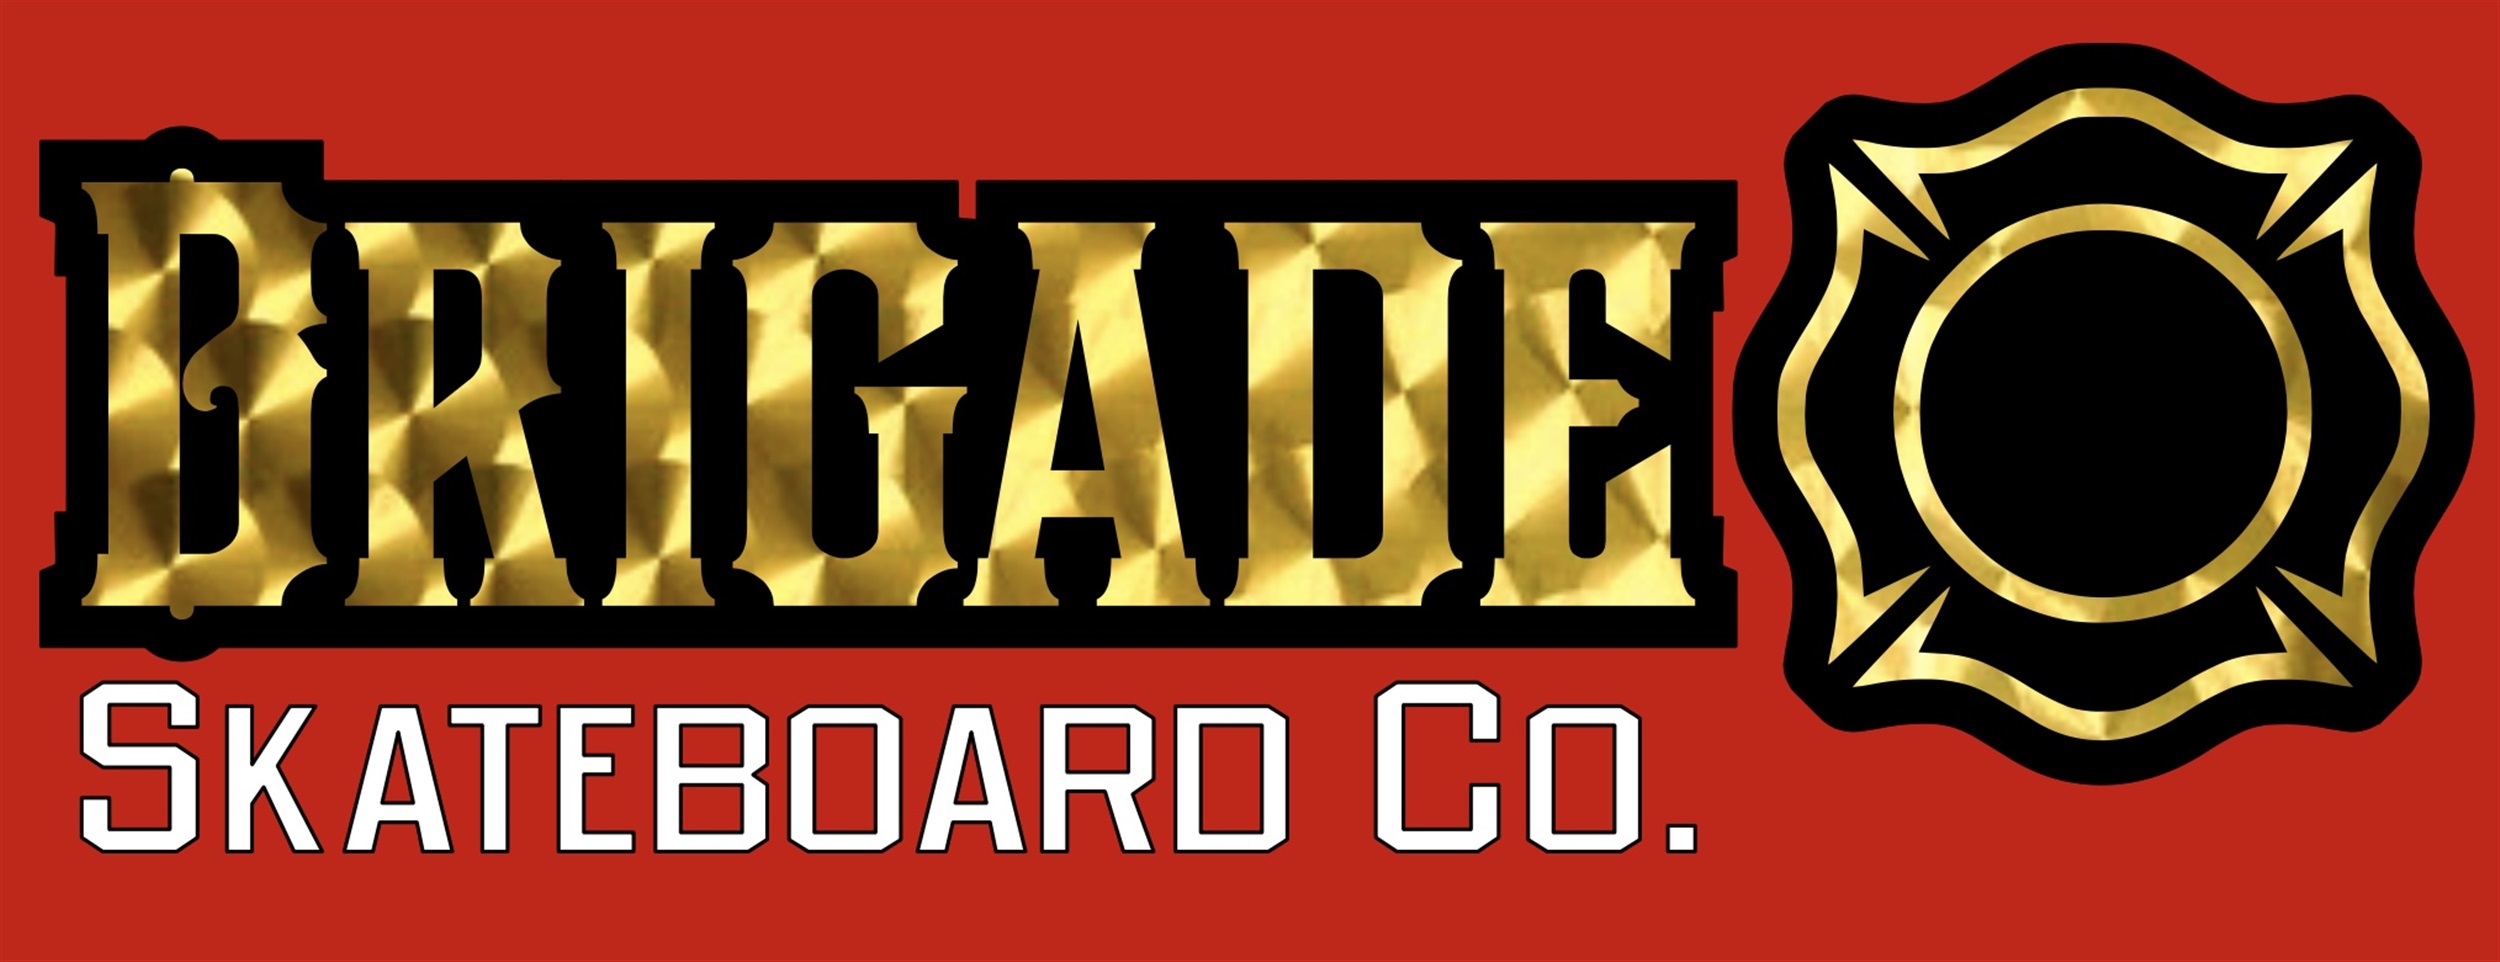 Brigade Skateboard Co.